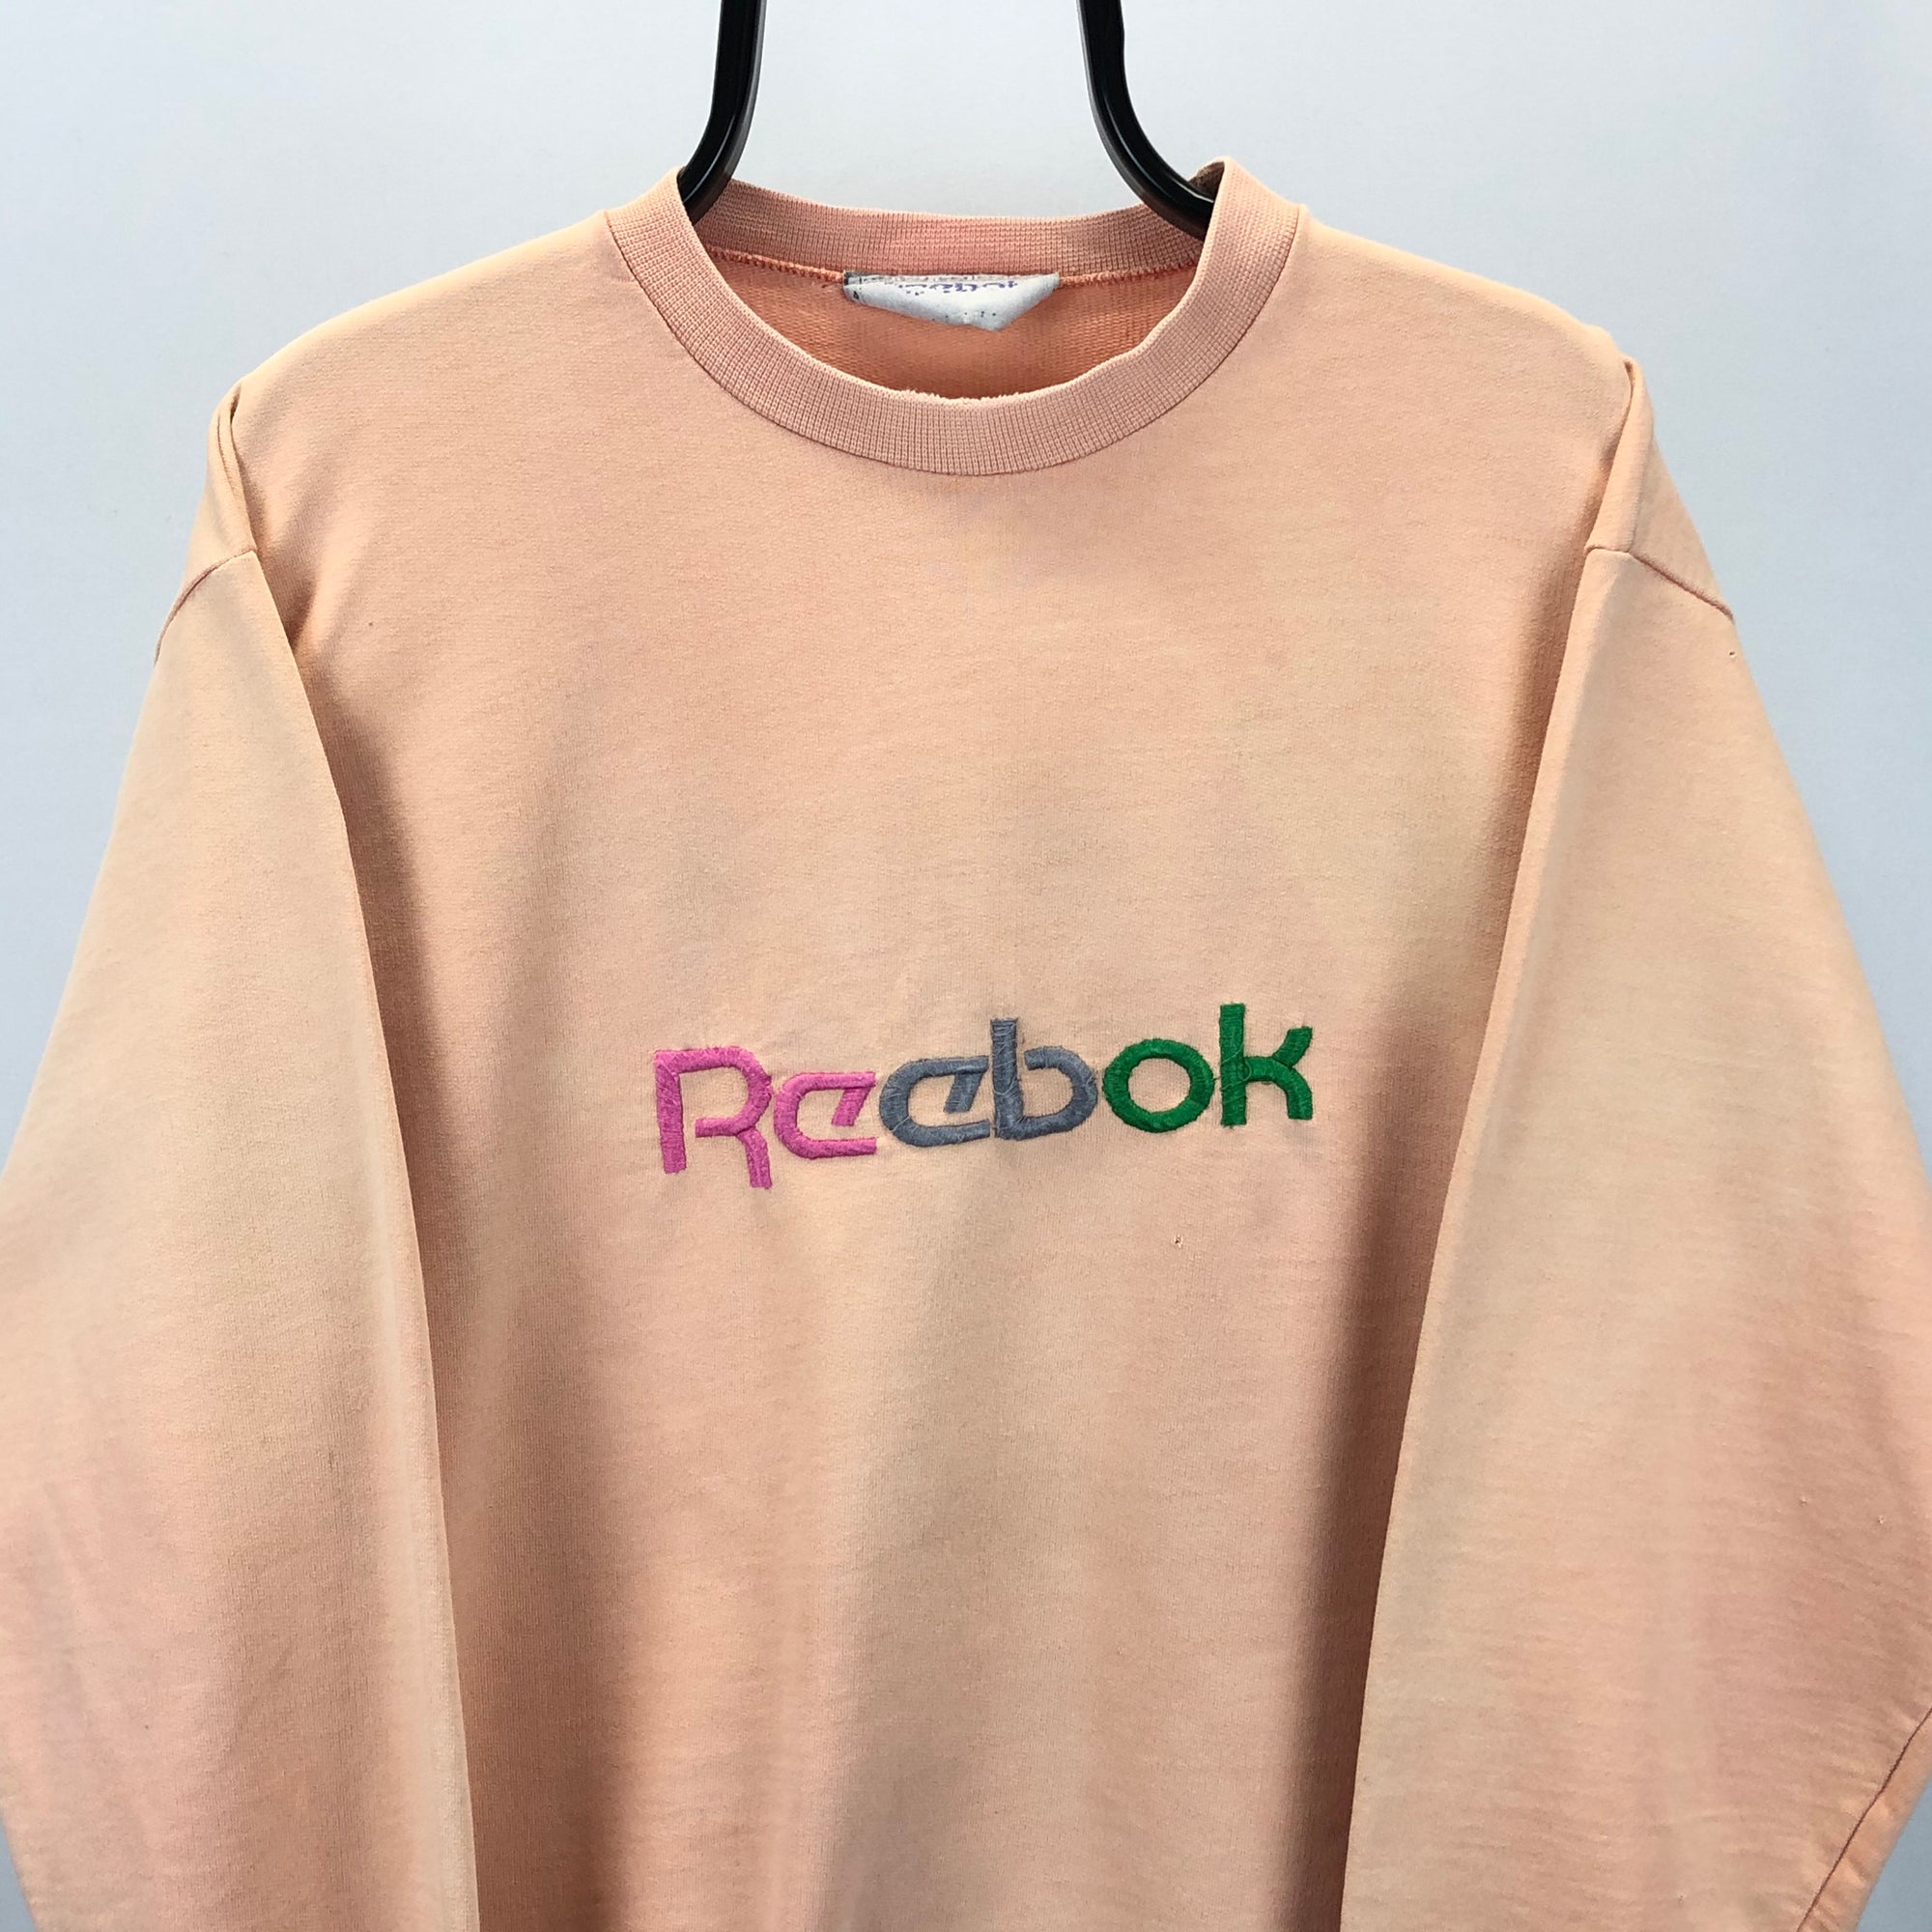 Vintage 80s Reebok Spellout Sweatshirt in Peach - Men's Medium/Women's Large